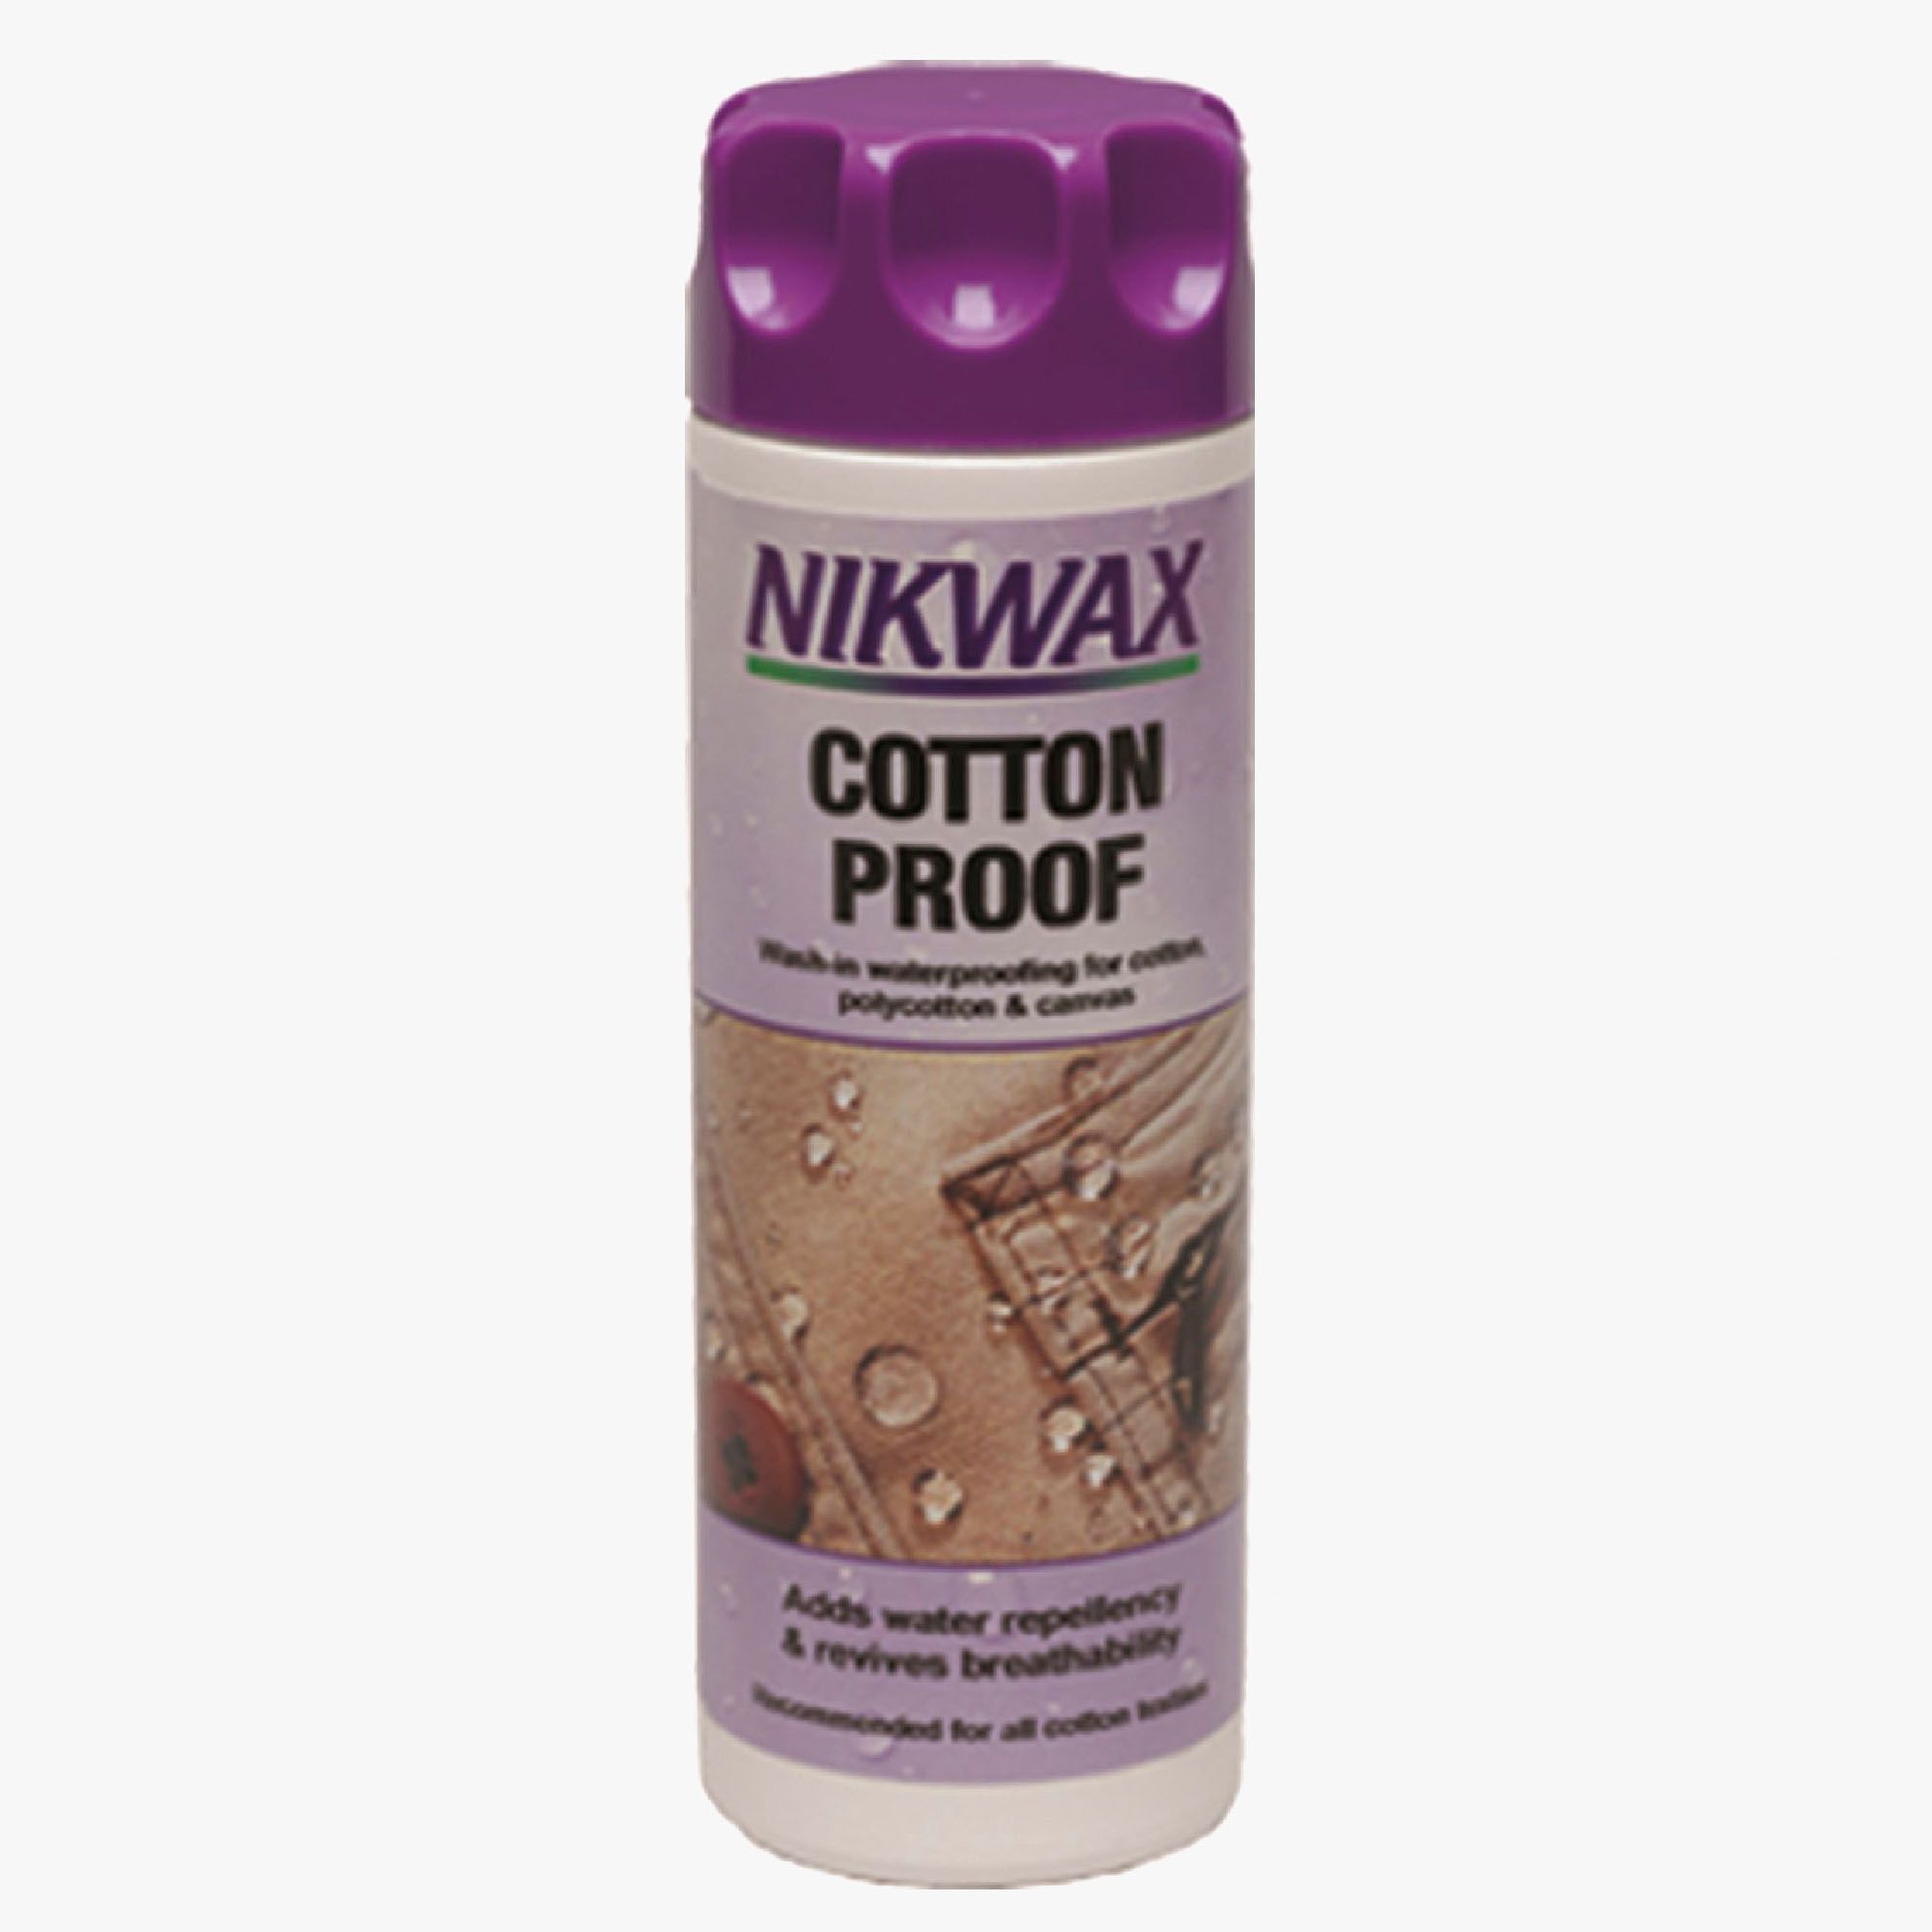 Nikwax Cotton Proofing, 300ml NIK261